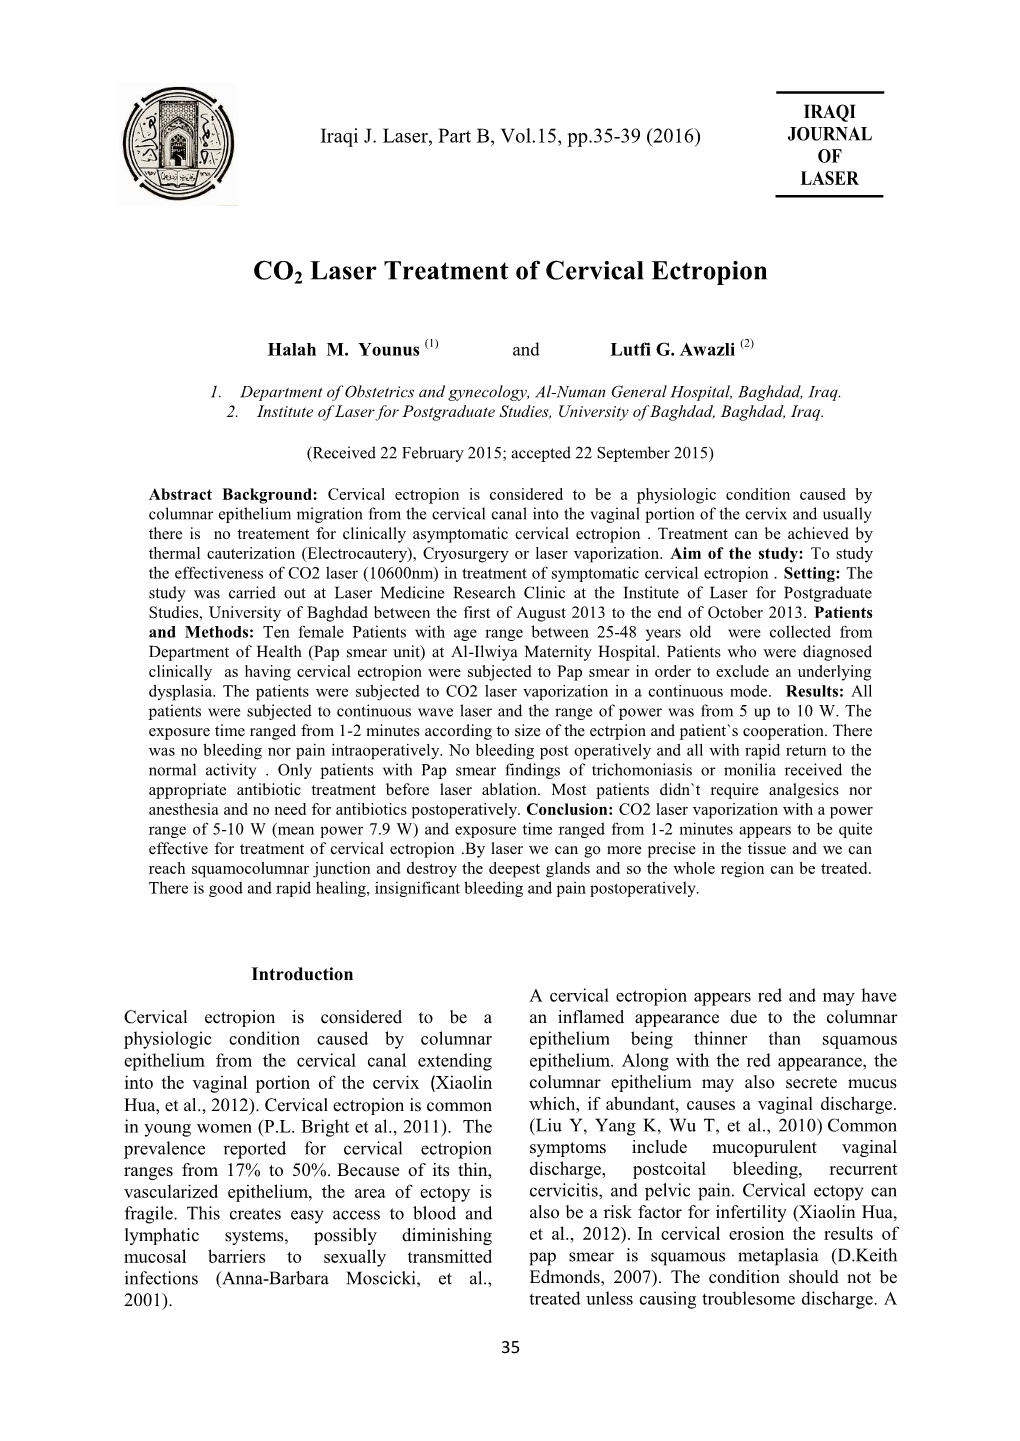 CO2 Laser Treatment of Cervical Ectropion